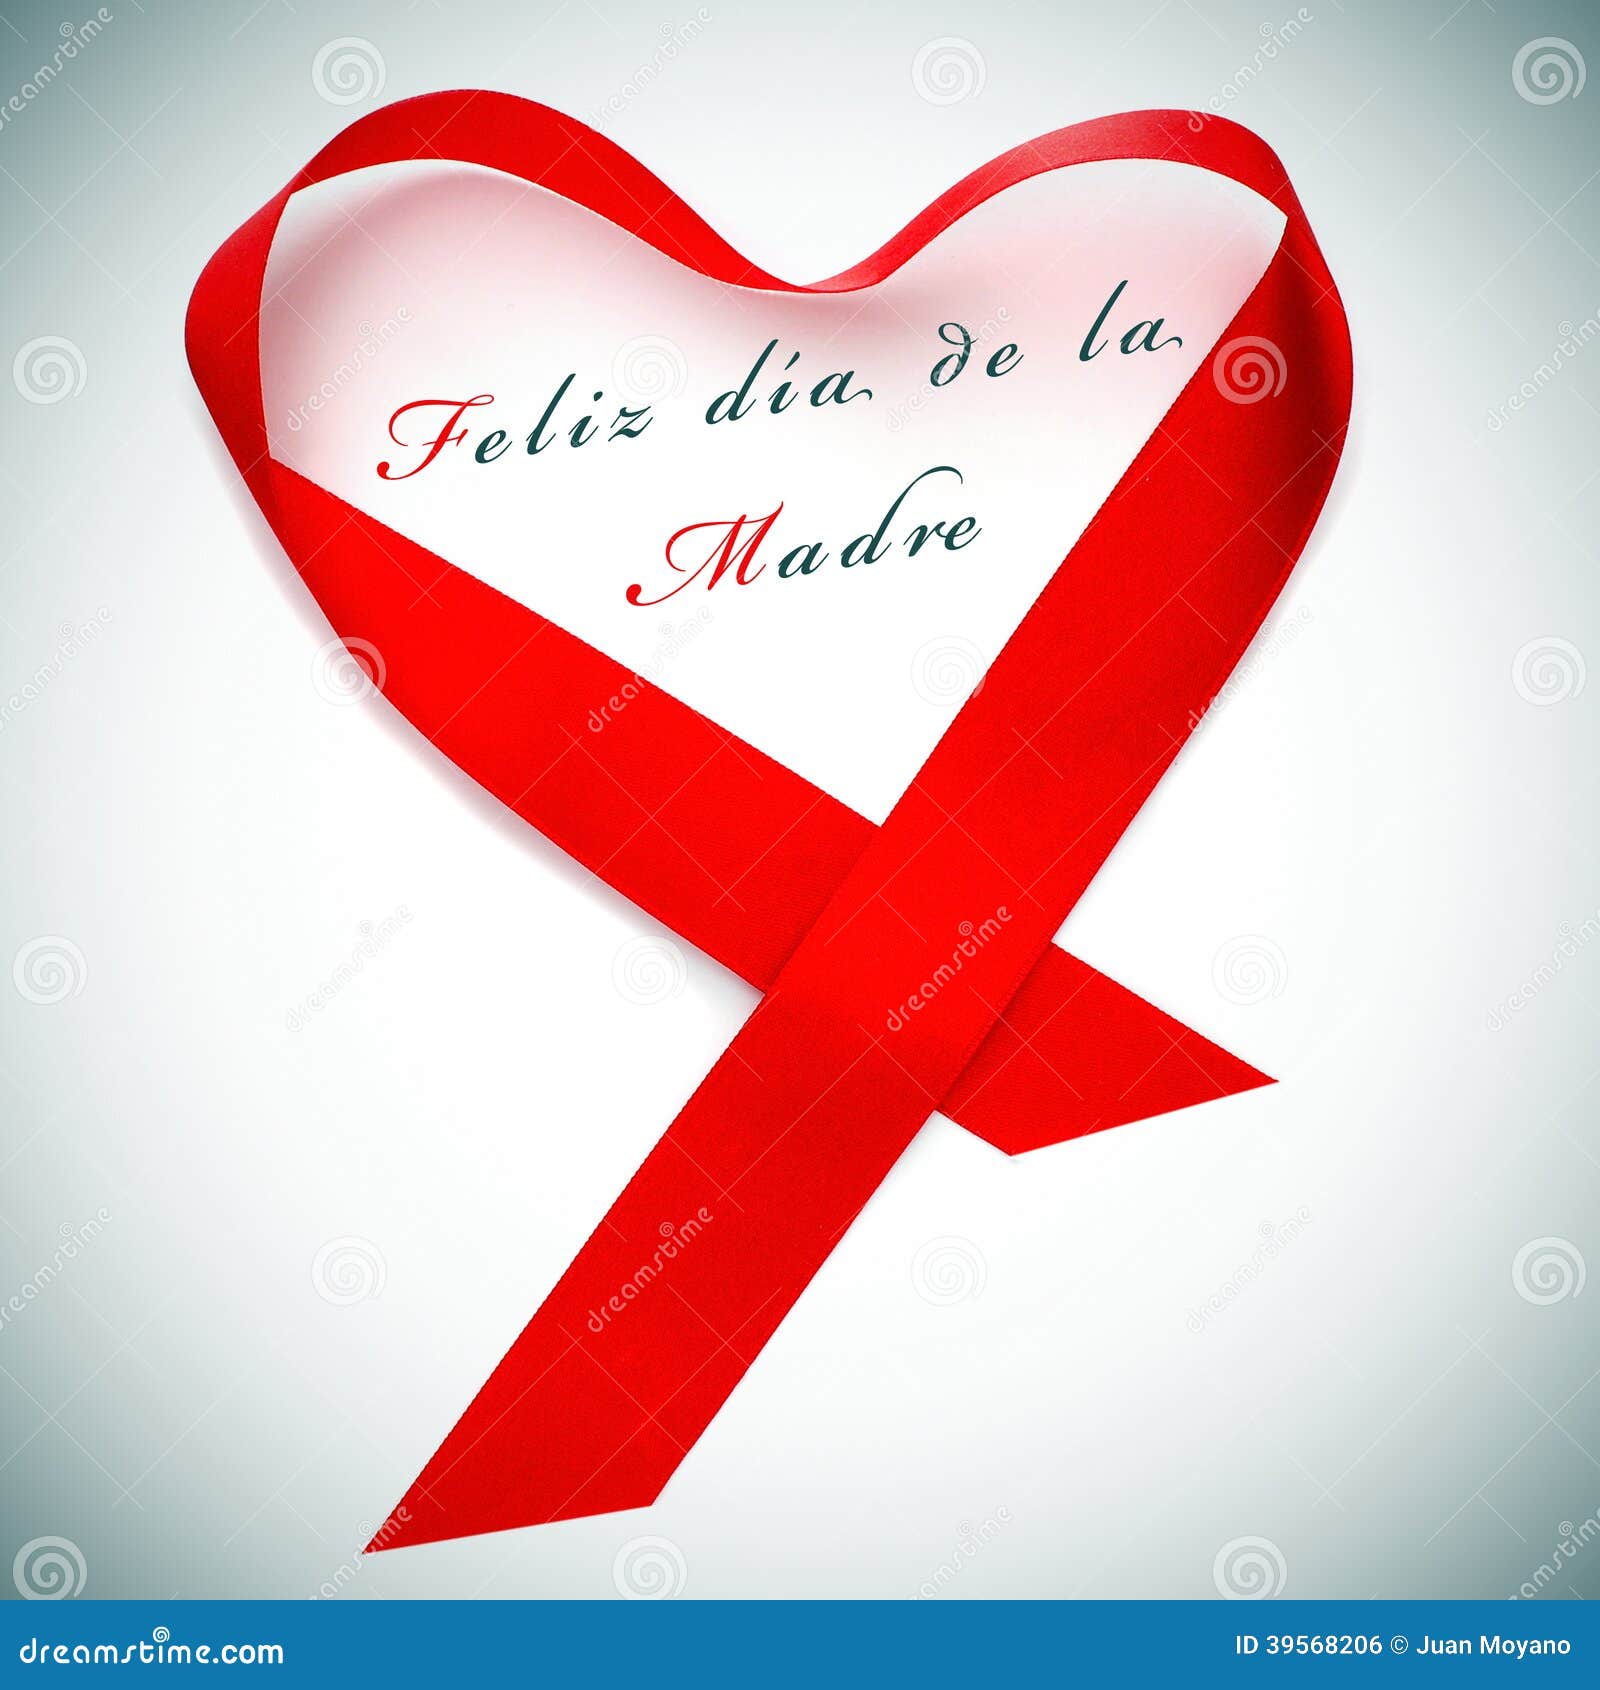 https://thumbs.dreamstime.com/z/feliz-dia-de-la-madre-happy-mothers-day-written-spanish-red-satin-ribbon-forming-heart-sentence-39568206.jpg